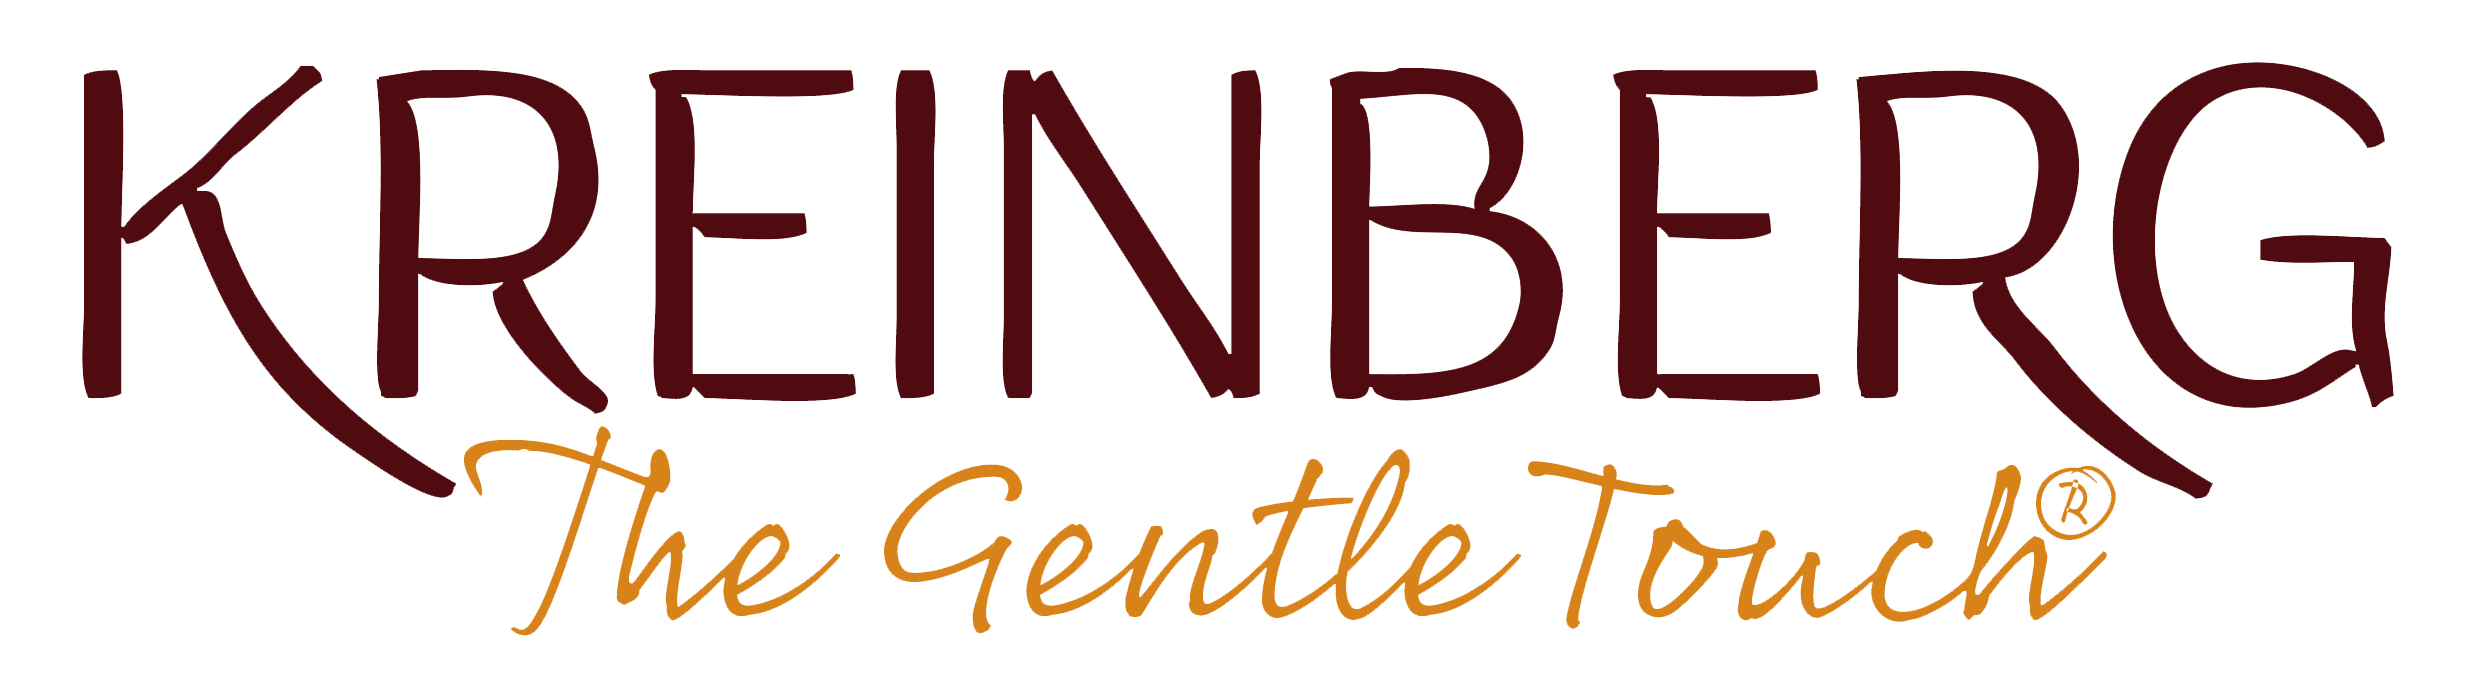 Kreinberg - The Gentle Touch Logo